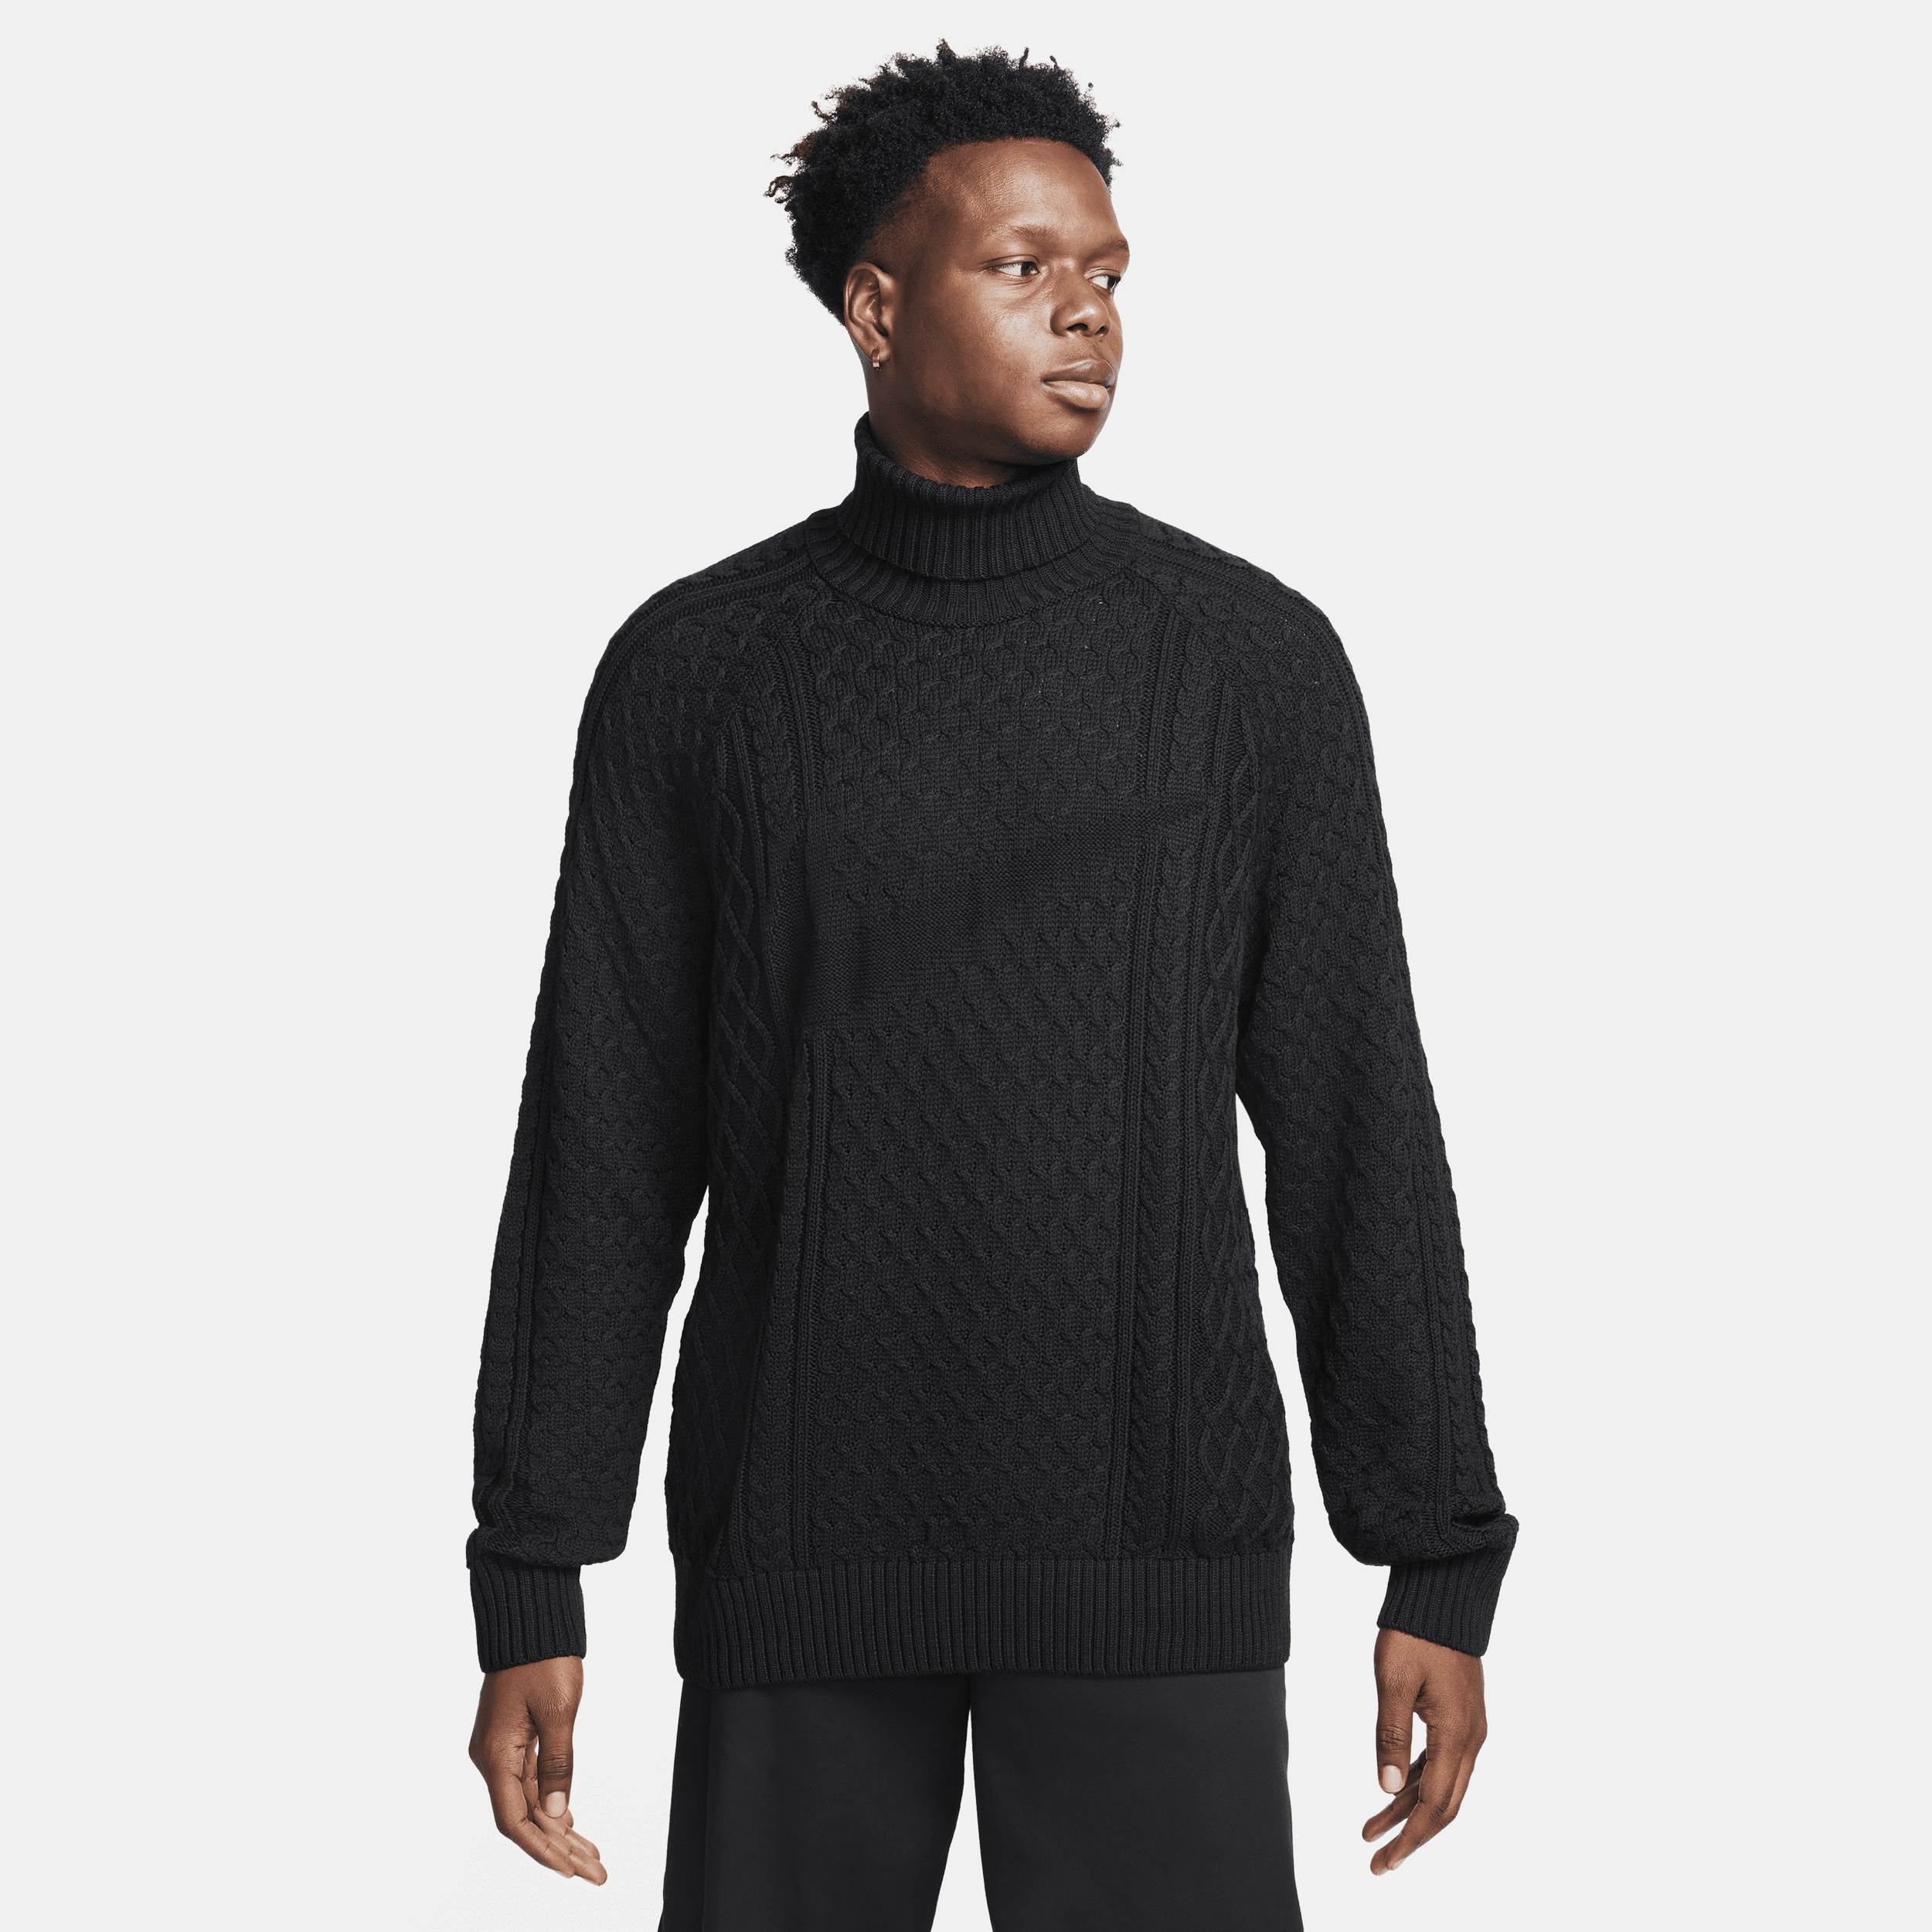 Nike Men's Life Cable Knit Turtleneck Sweater Black